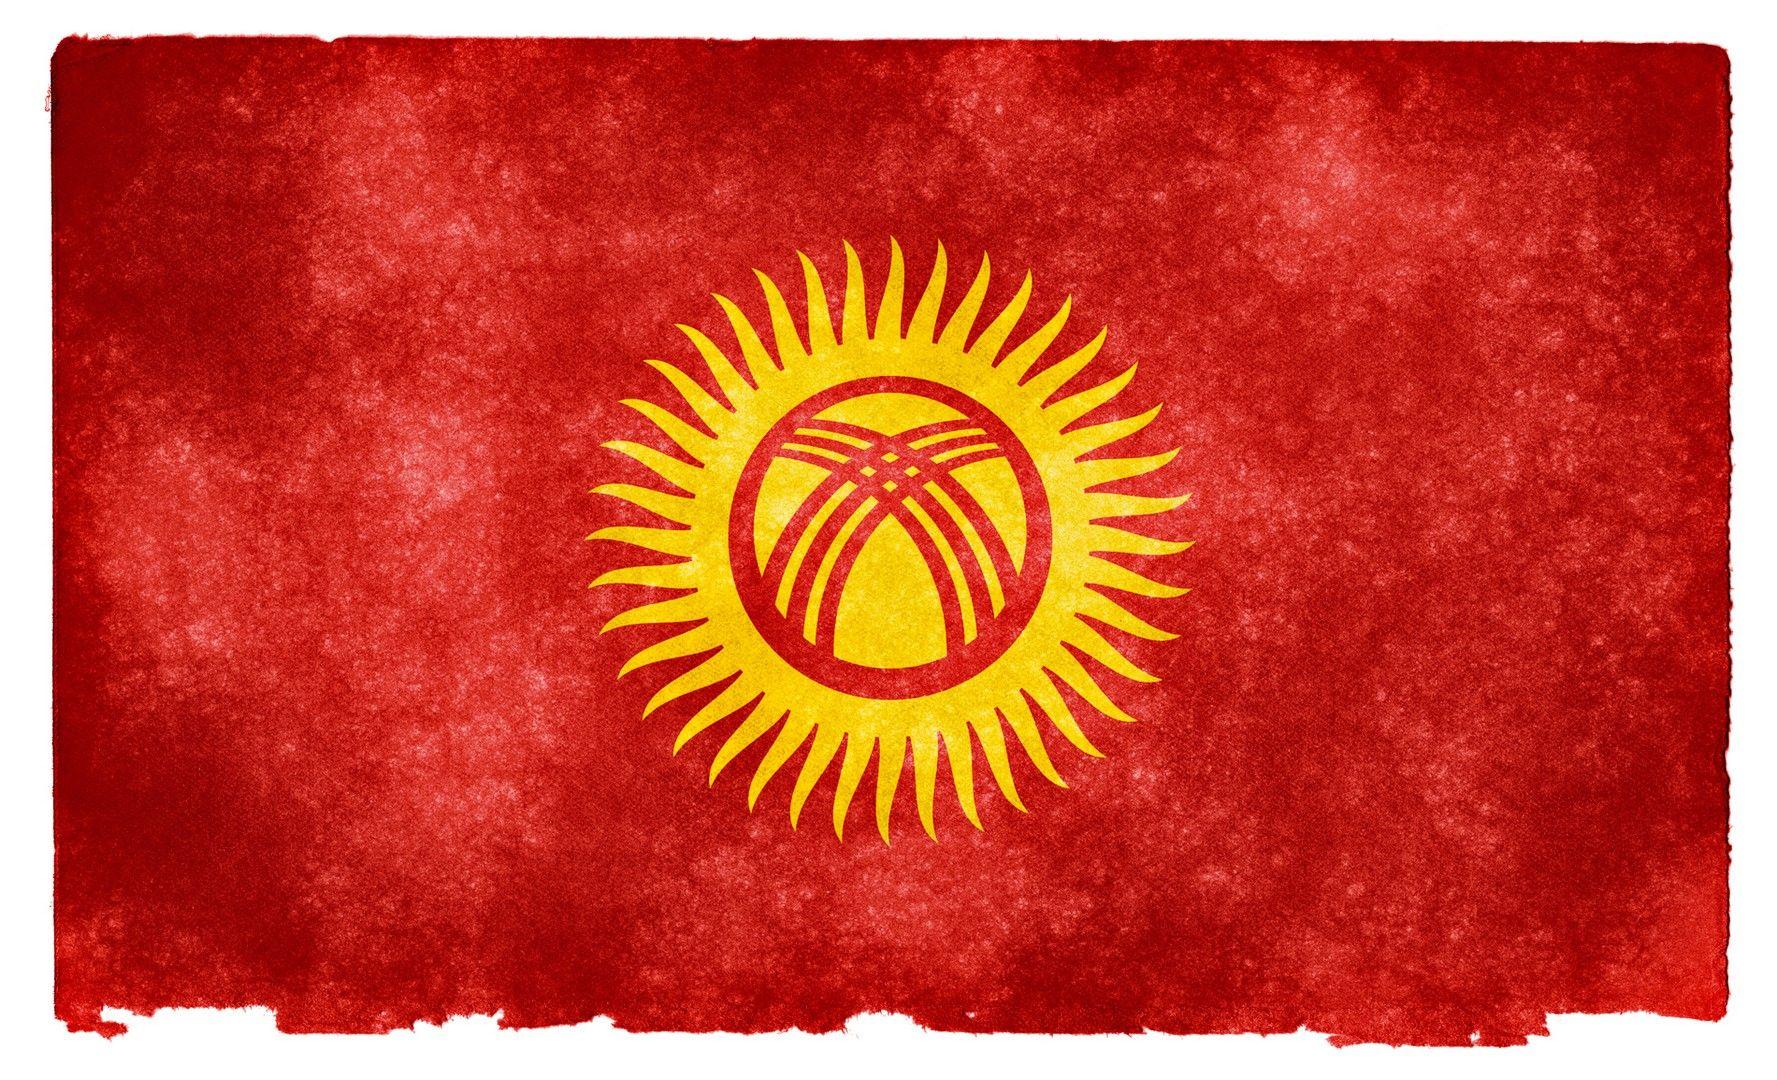 Flag of Kyrgyzstan wallpaper. Education. Flag, Wallpaper, Education